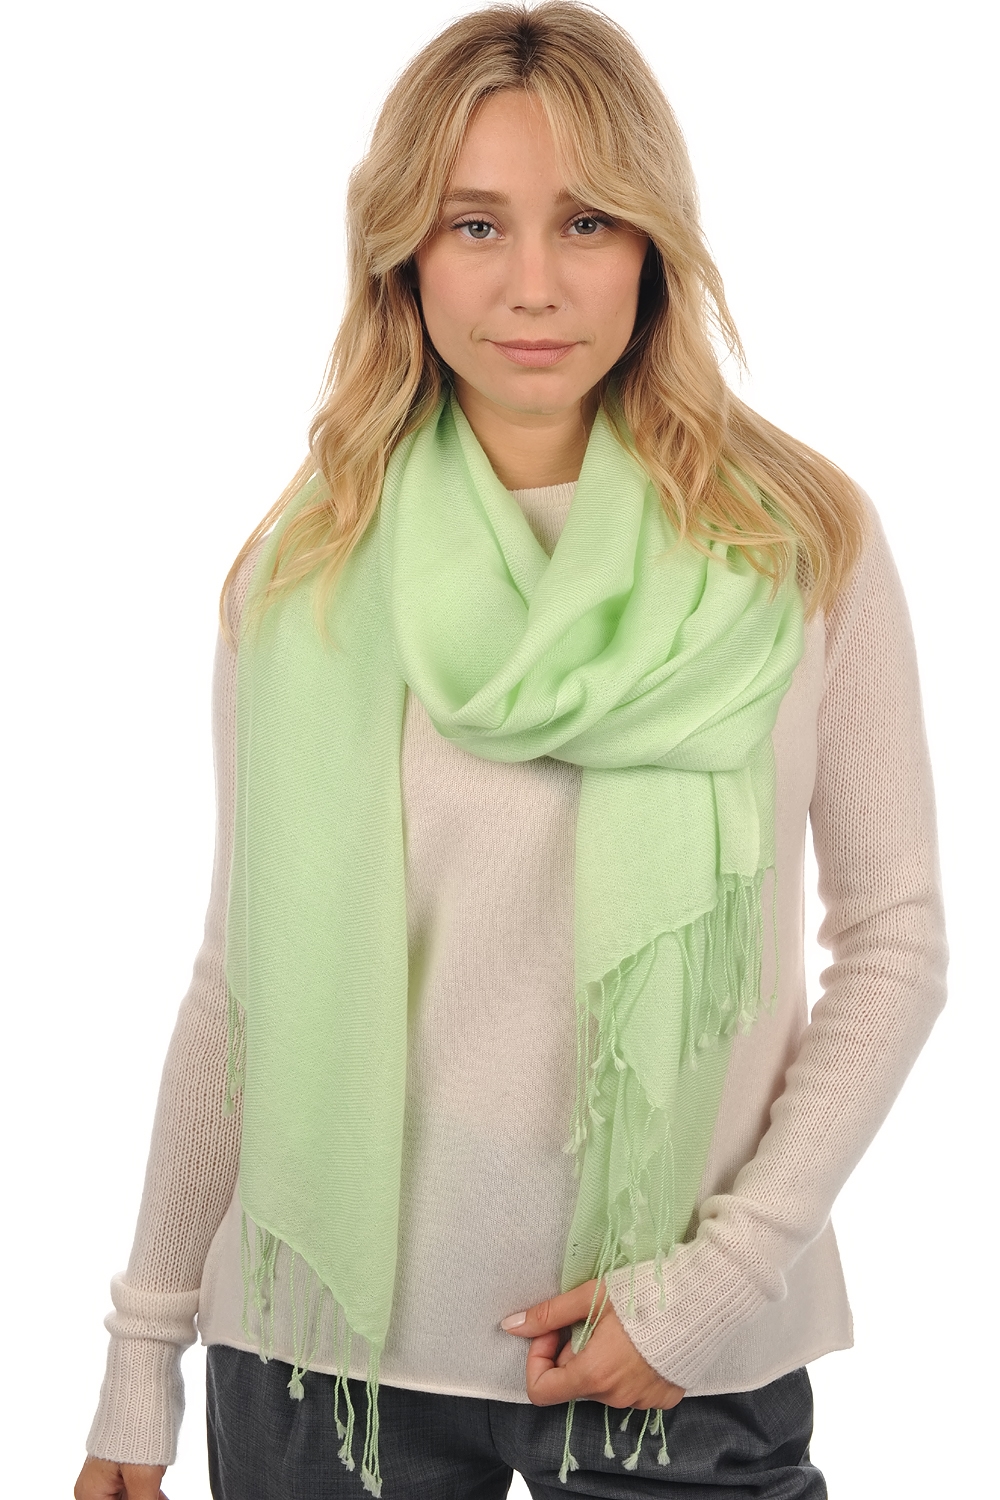 Cashmere accessories shawls diamant lime green 201 cm x 71 cm